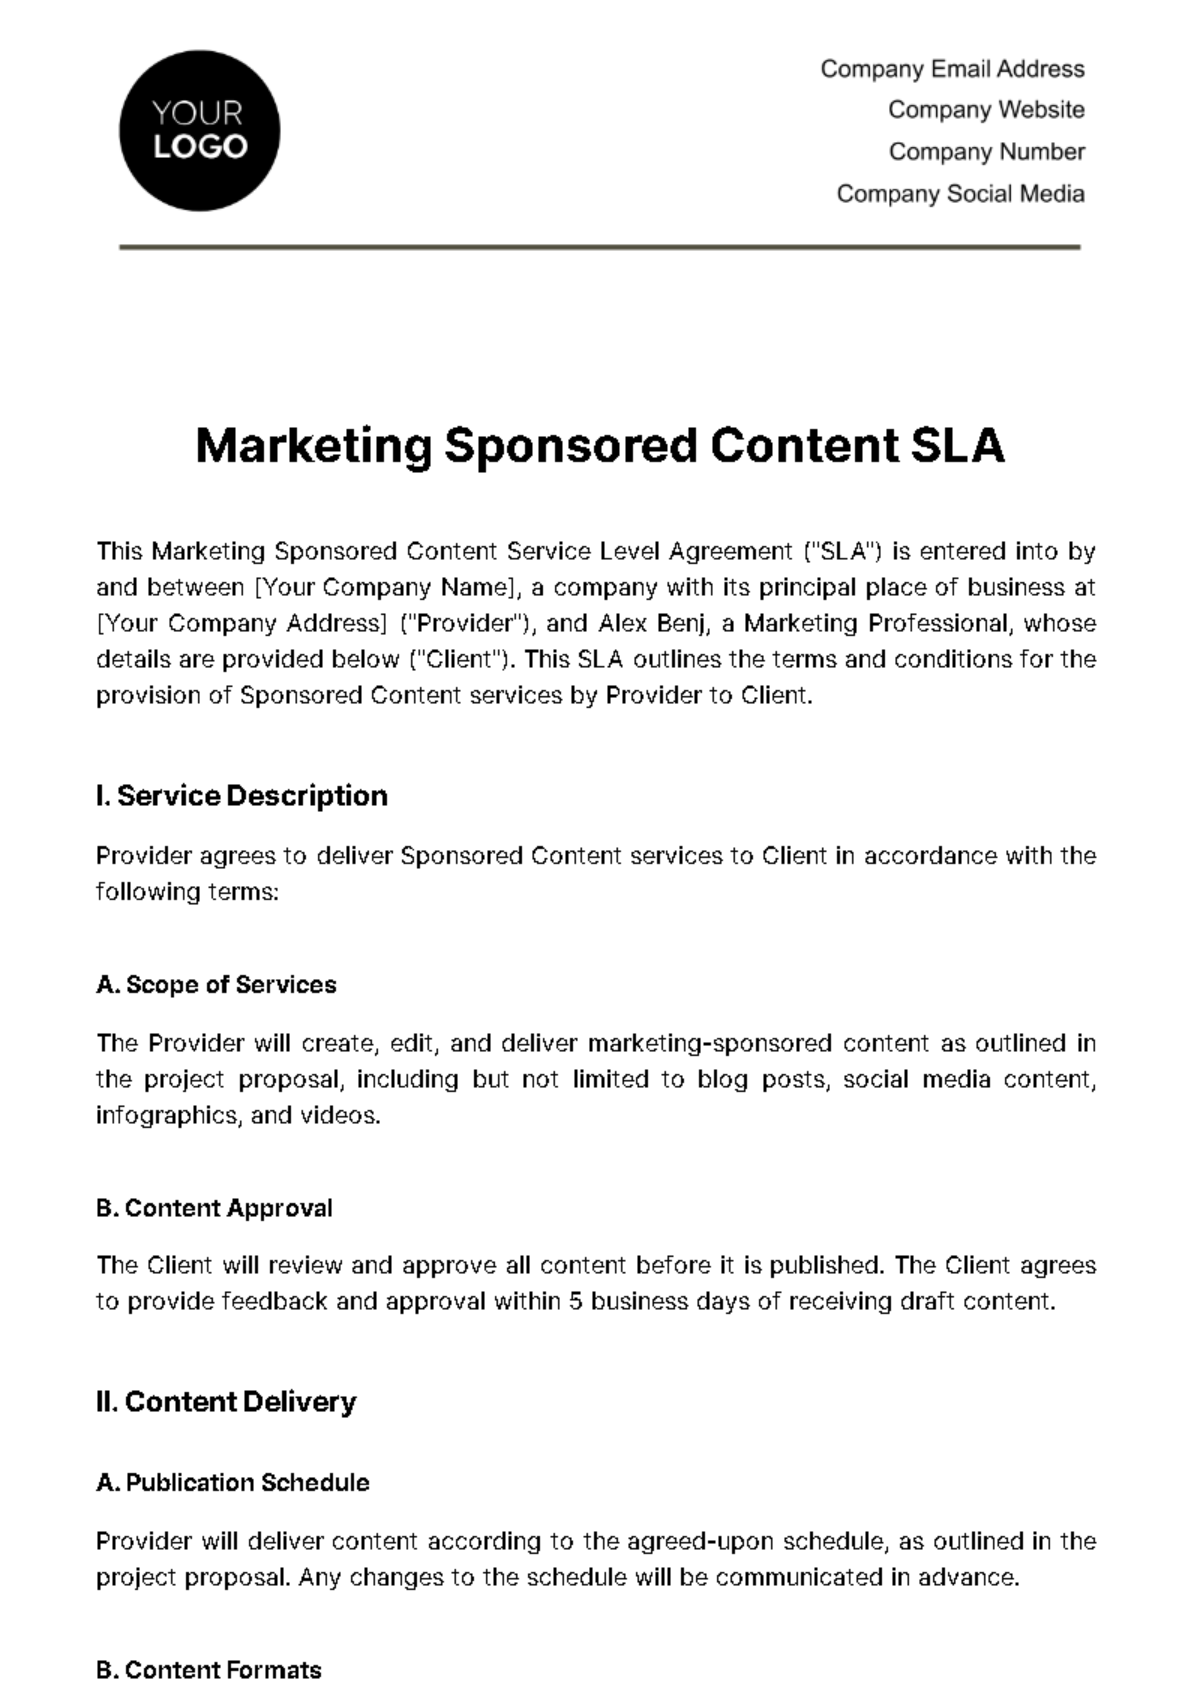 Free Marketing Sponsored Content SLA Template